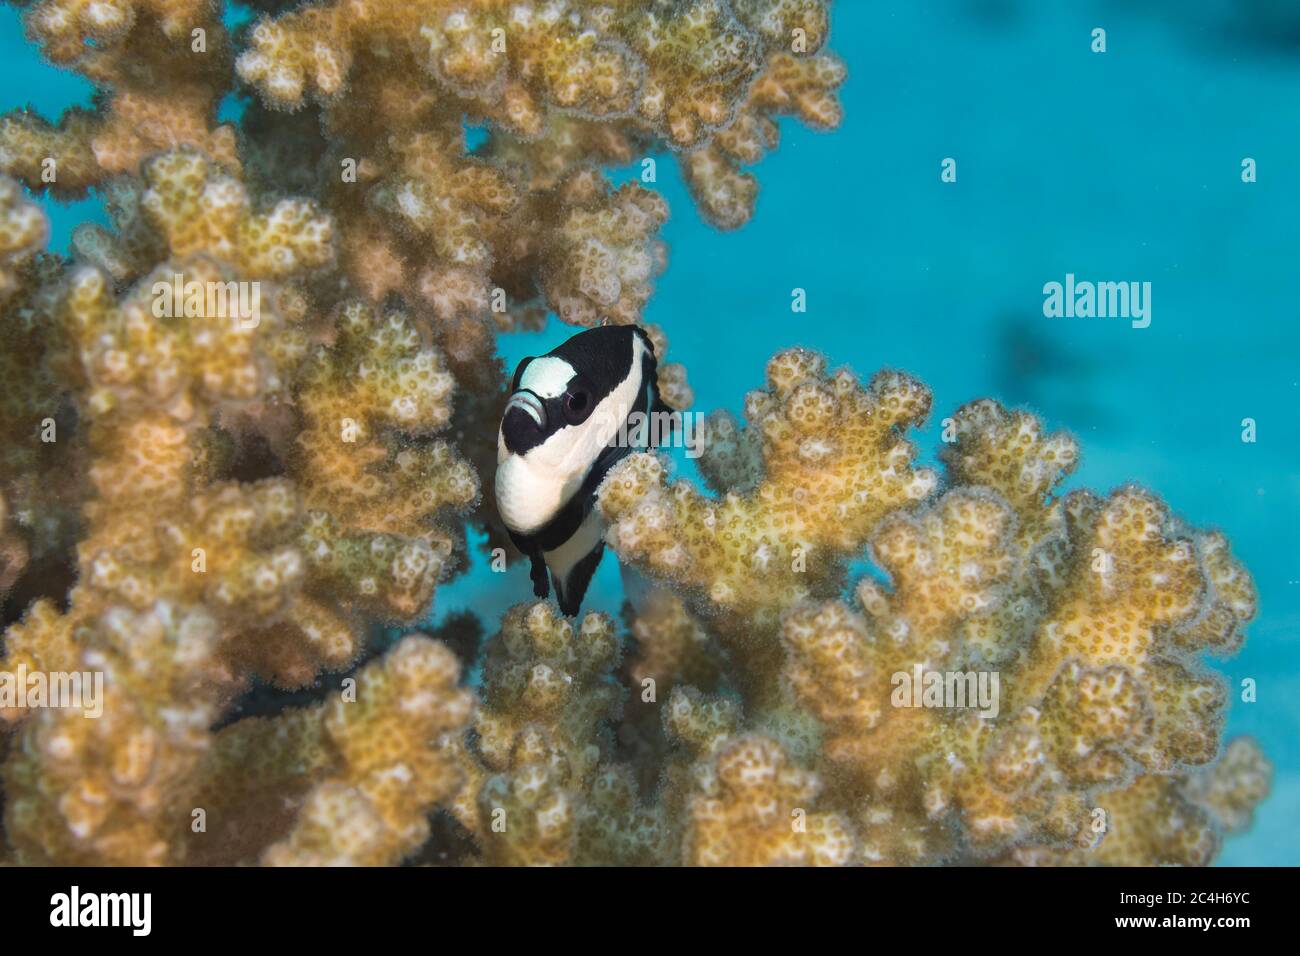 Four stripe damselfish (Dascyllus melanurus), small black and white stripe fish hiding in coral Stock Photo